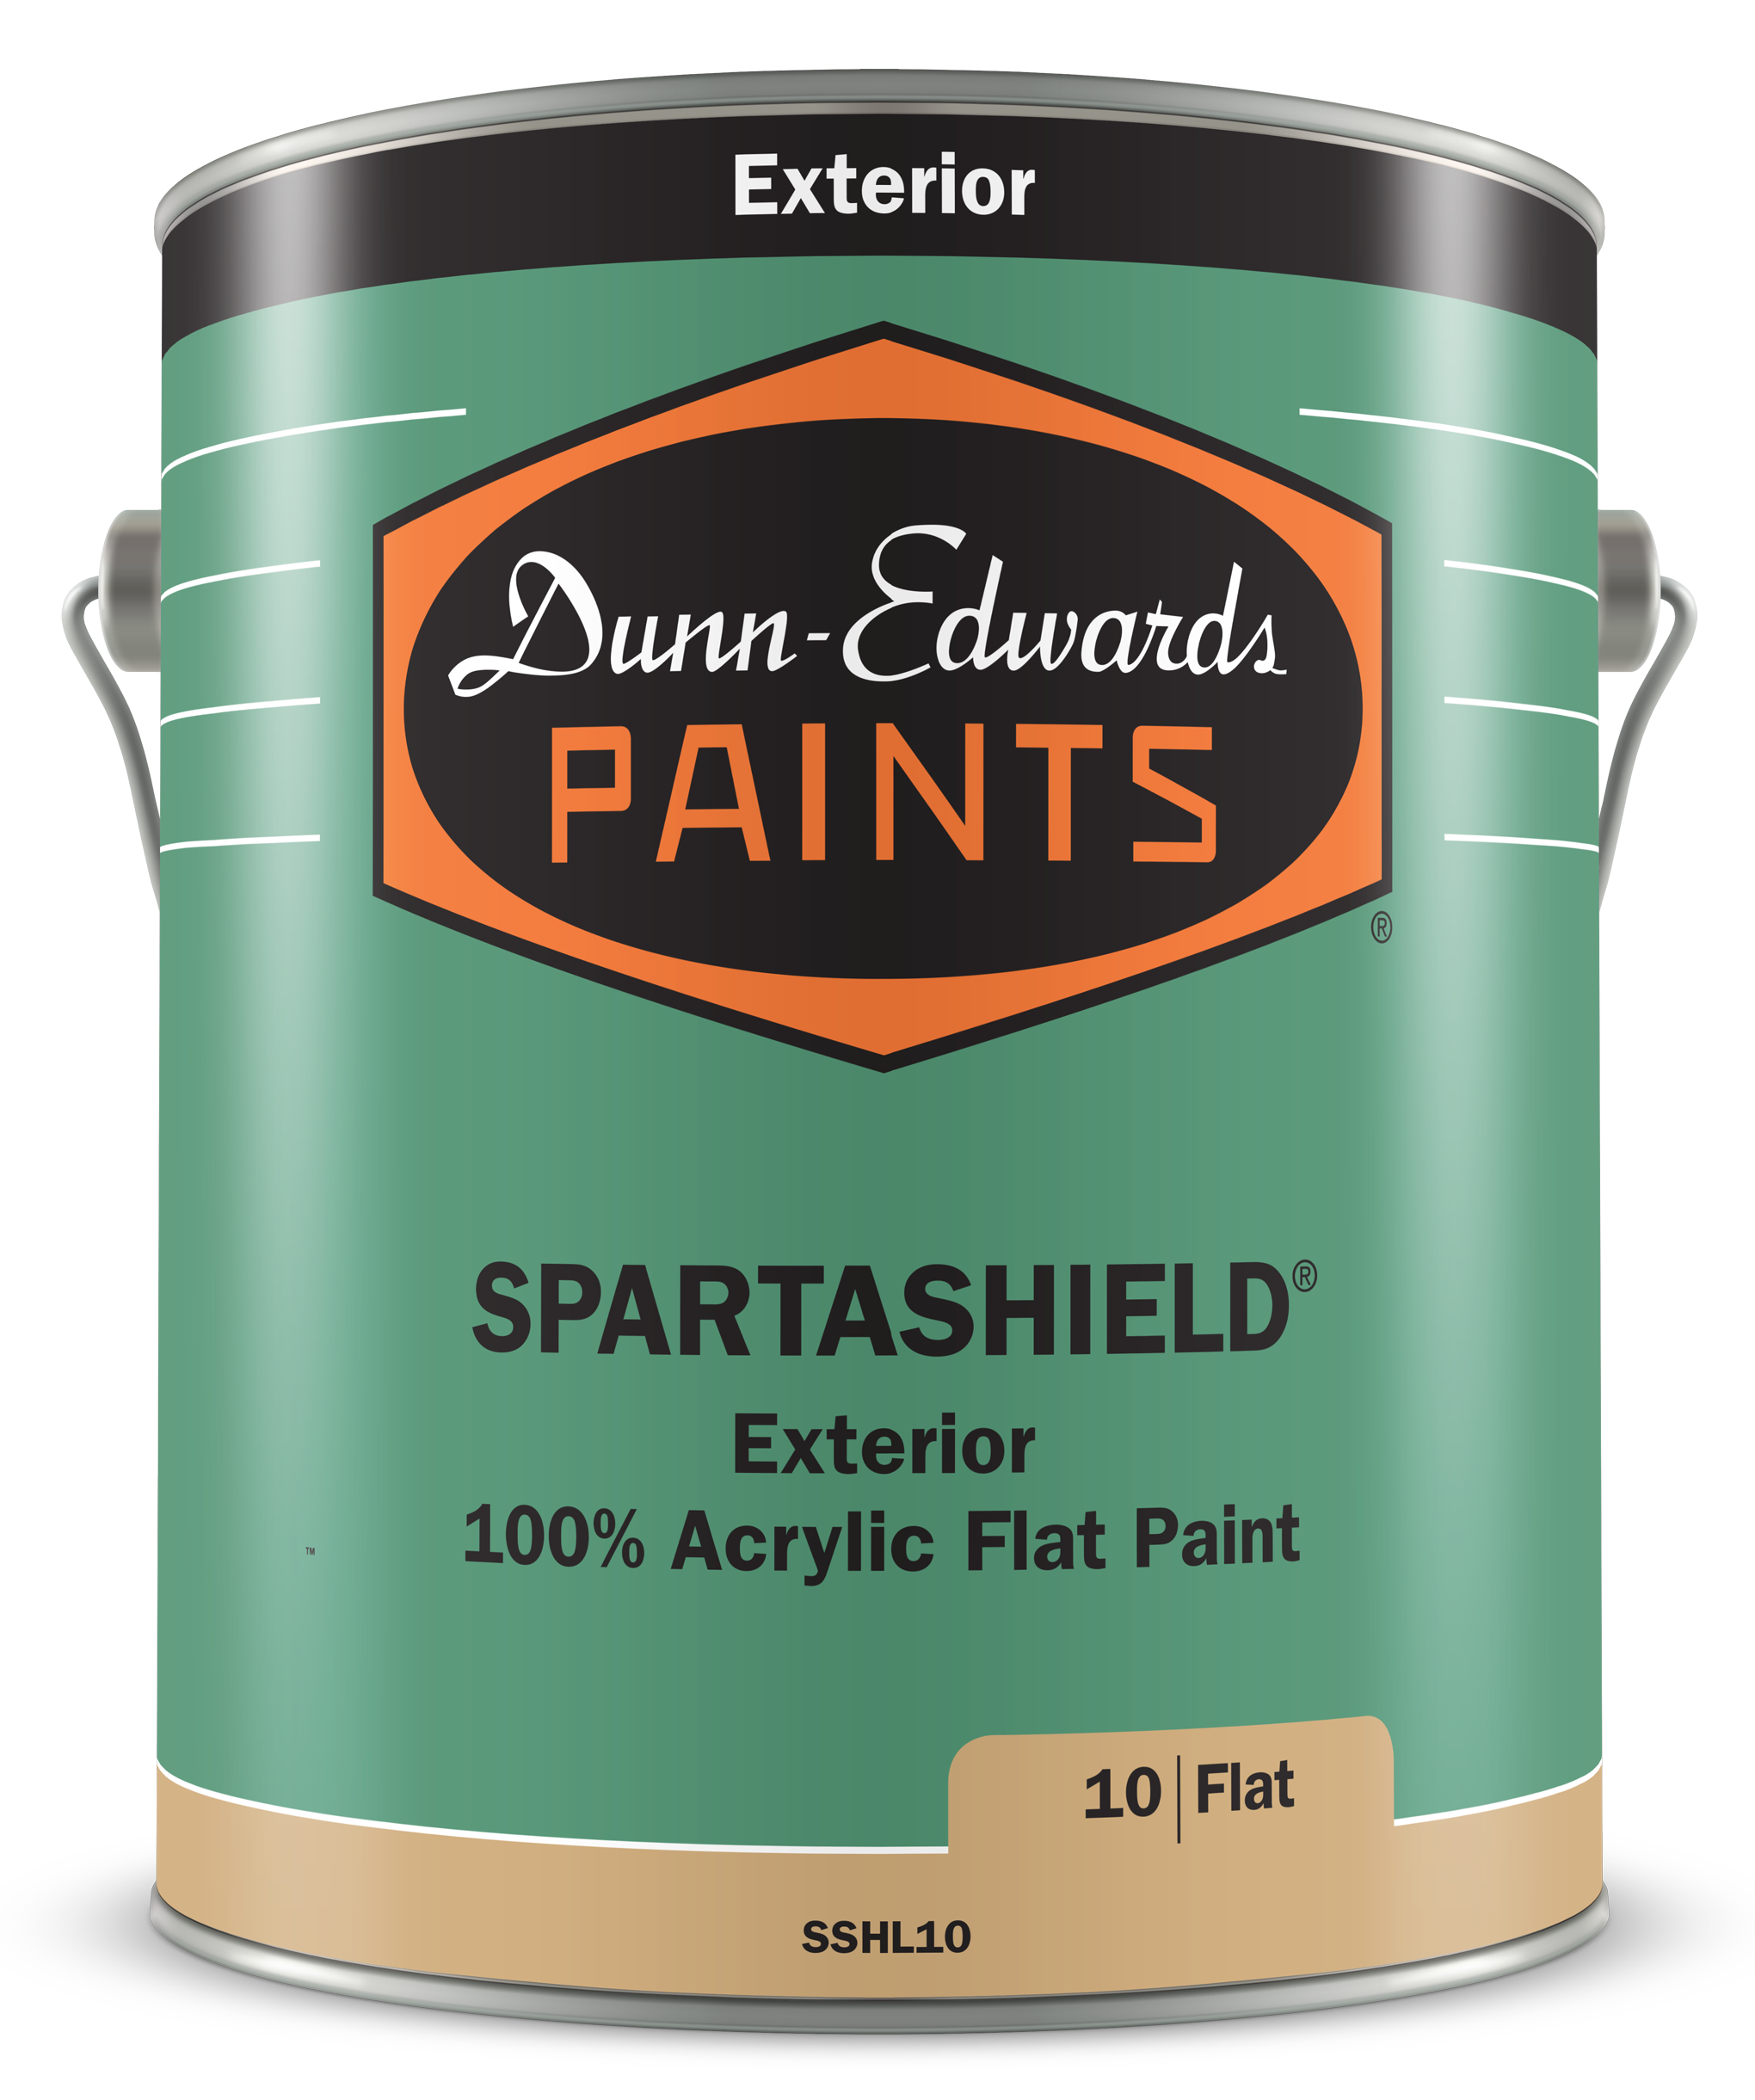 SPARTASHIELD Exterior 100% Acrylic Flat Paint Can